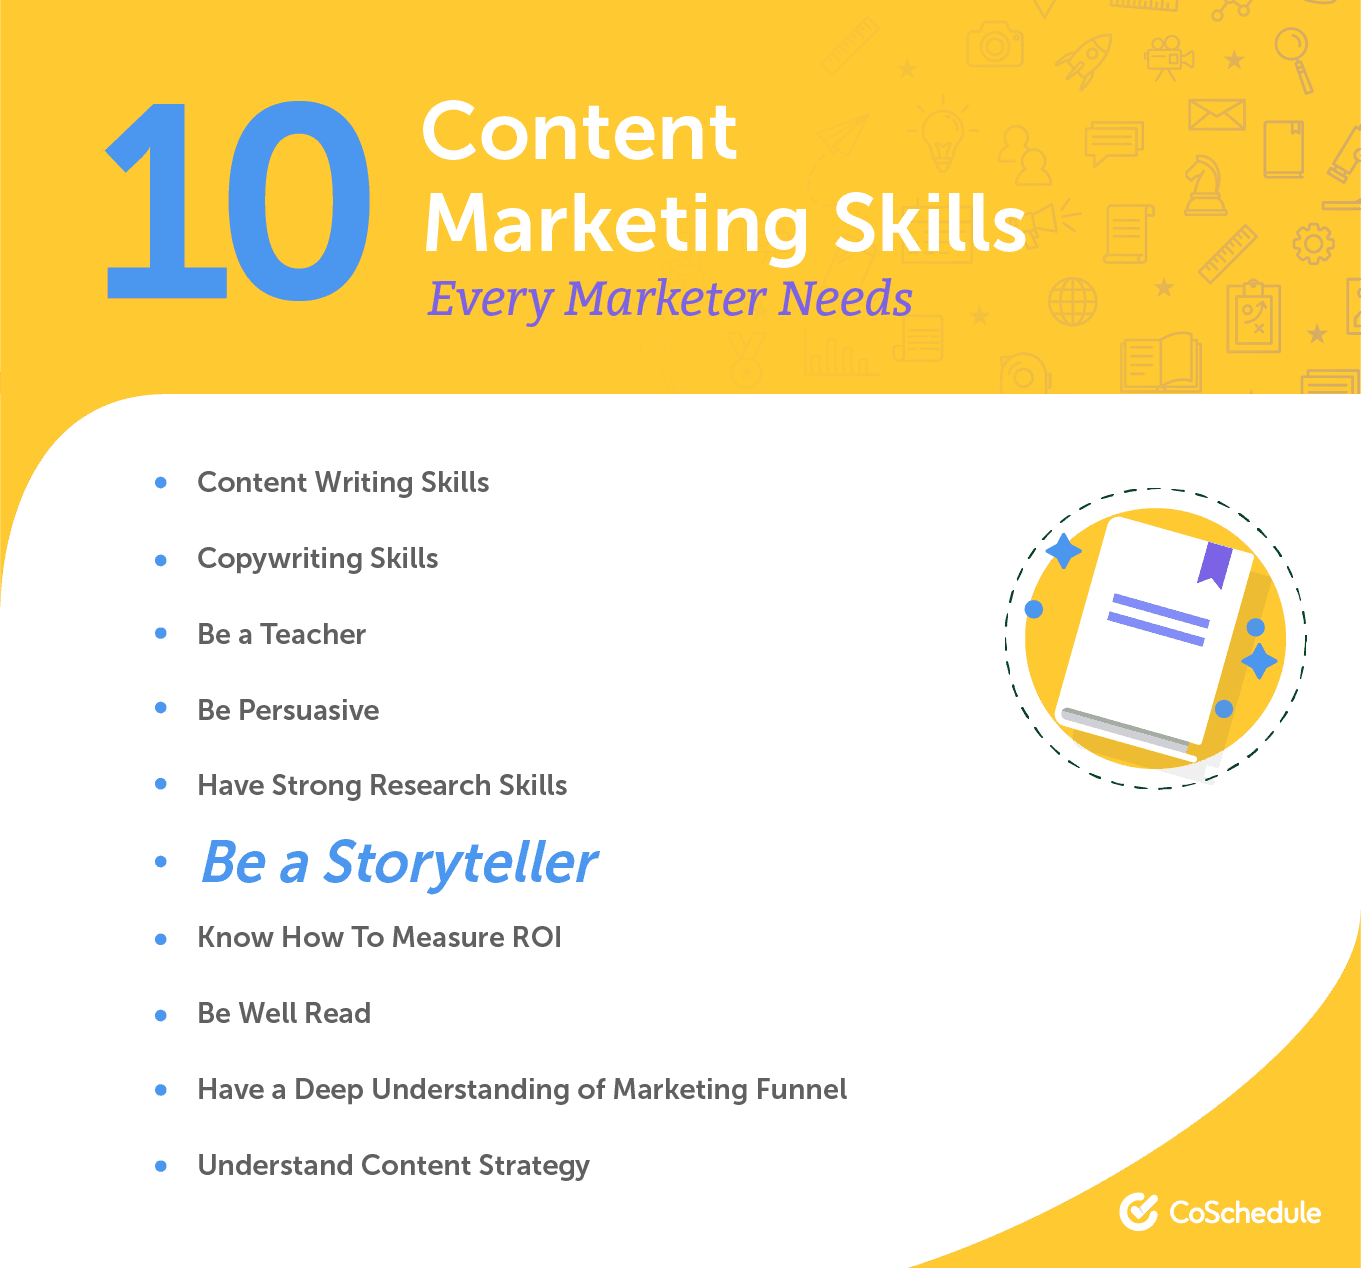 List of 10 content marketing skills every marketer needs.